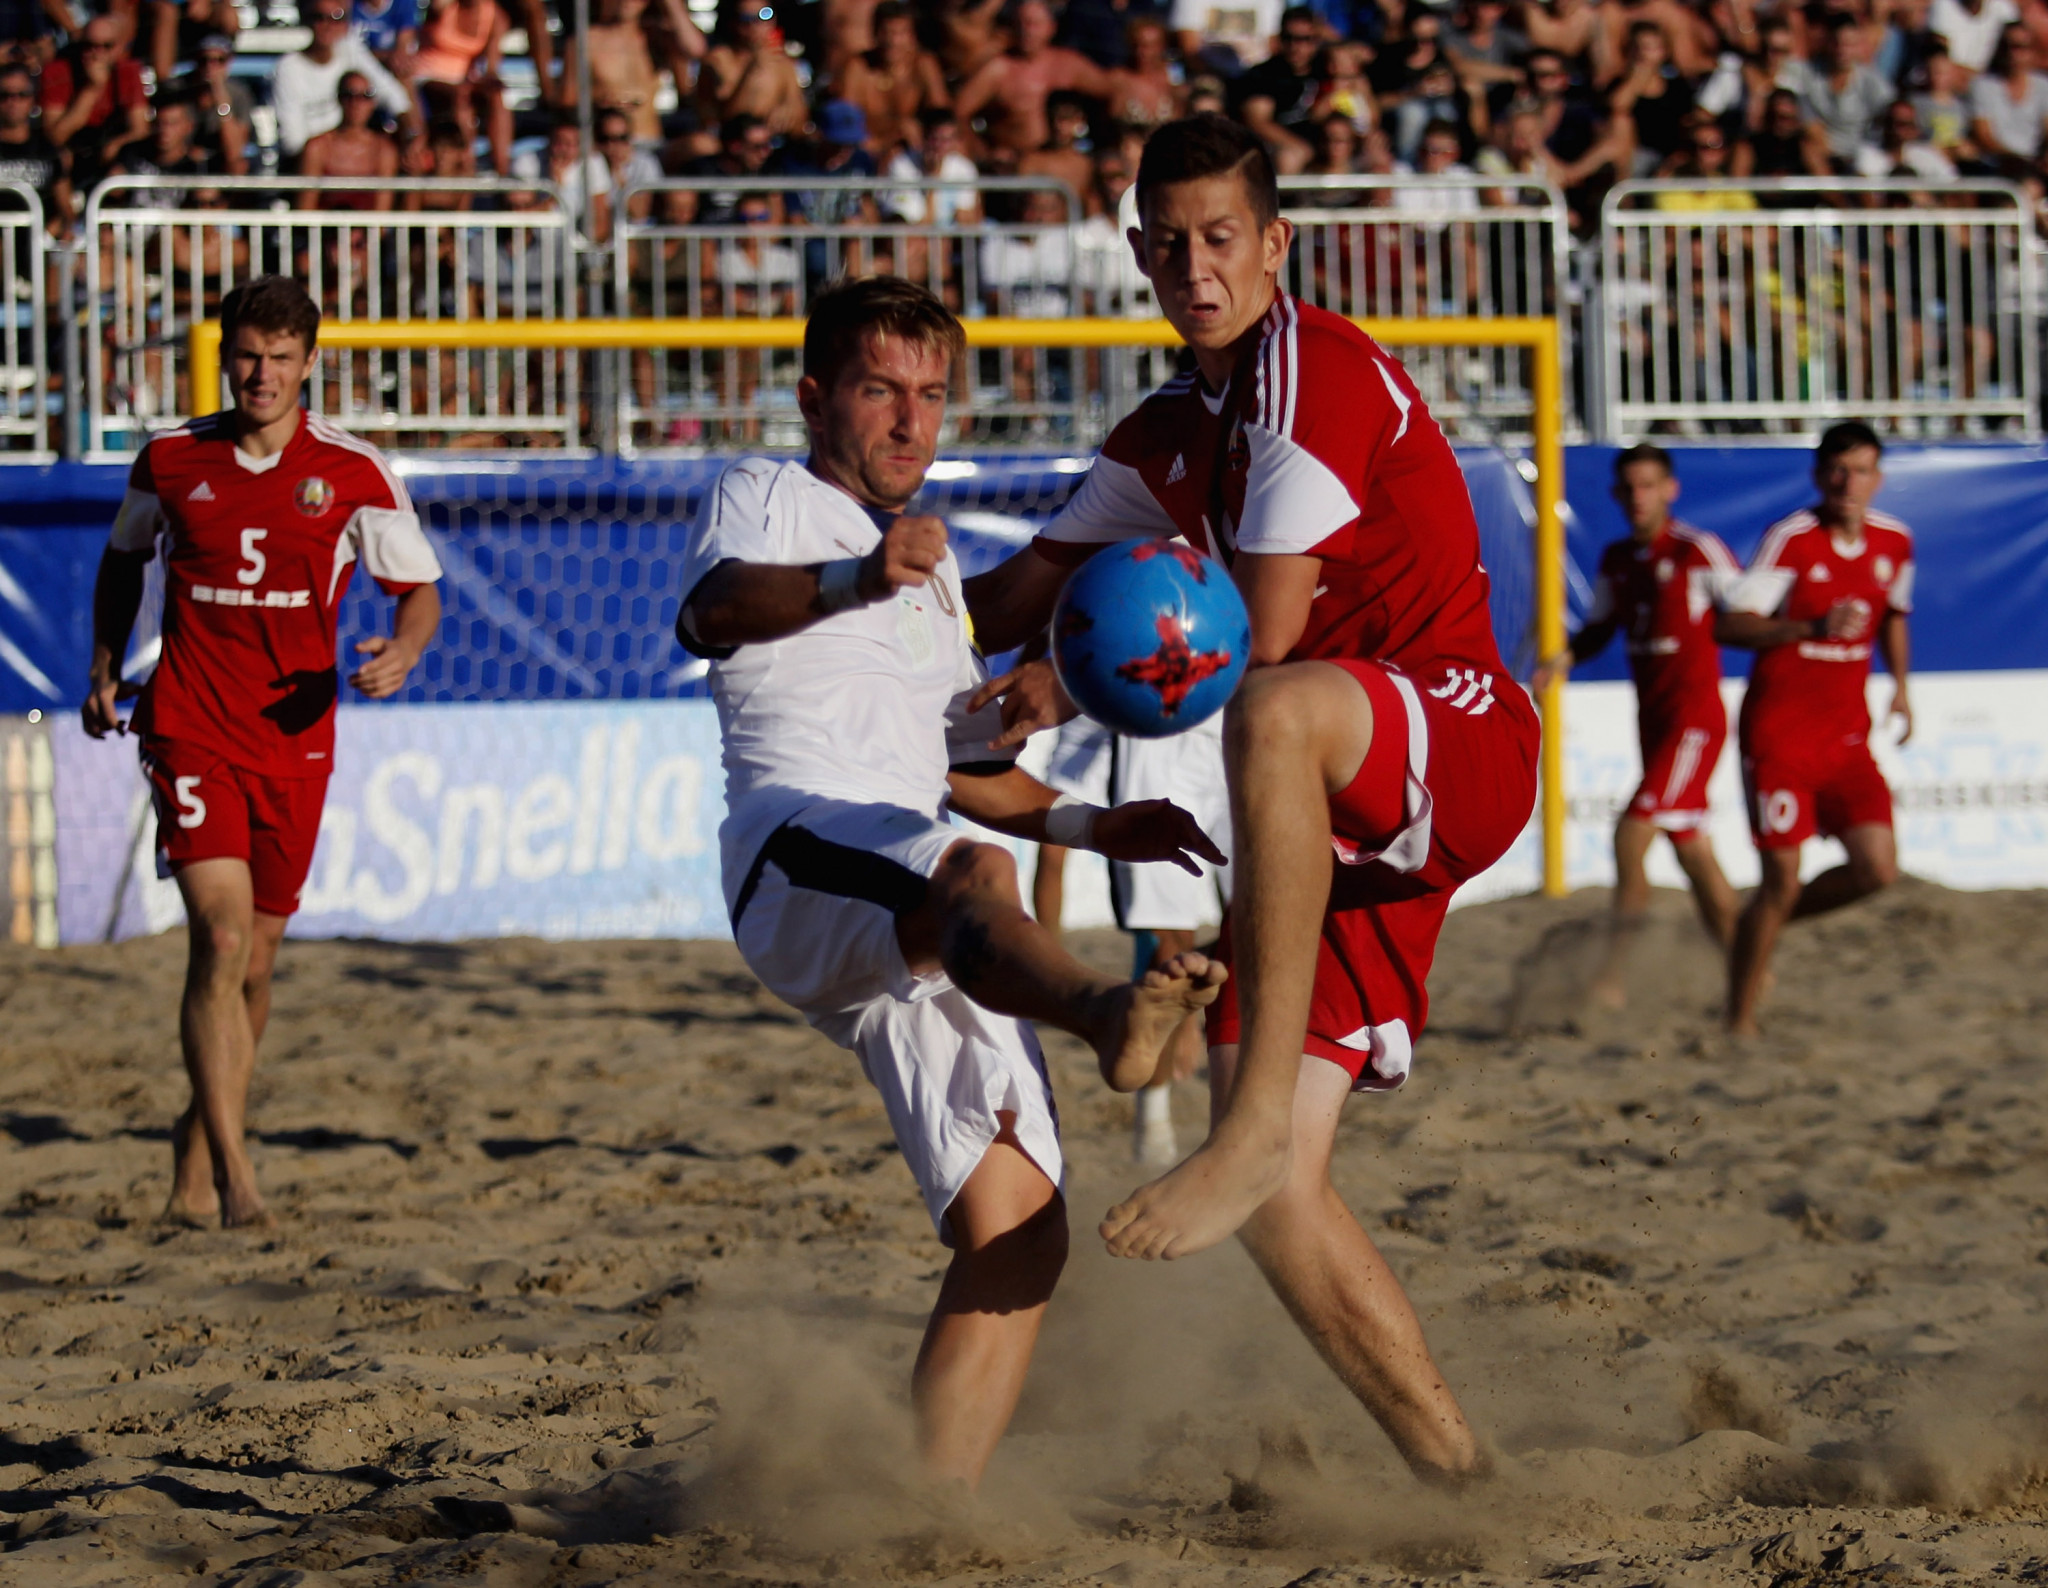 Draw made for Minsk 2019 beach soccer tournament